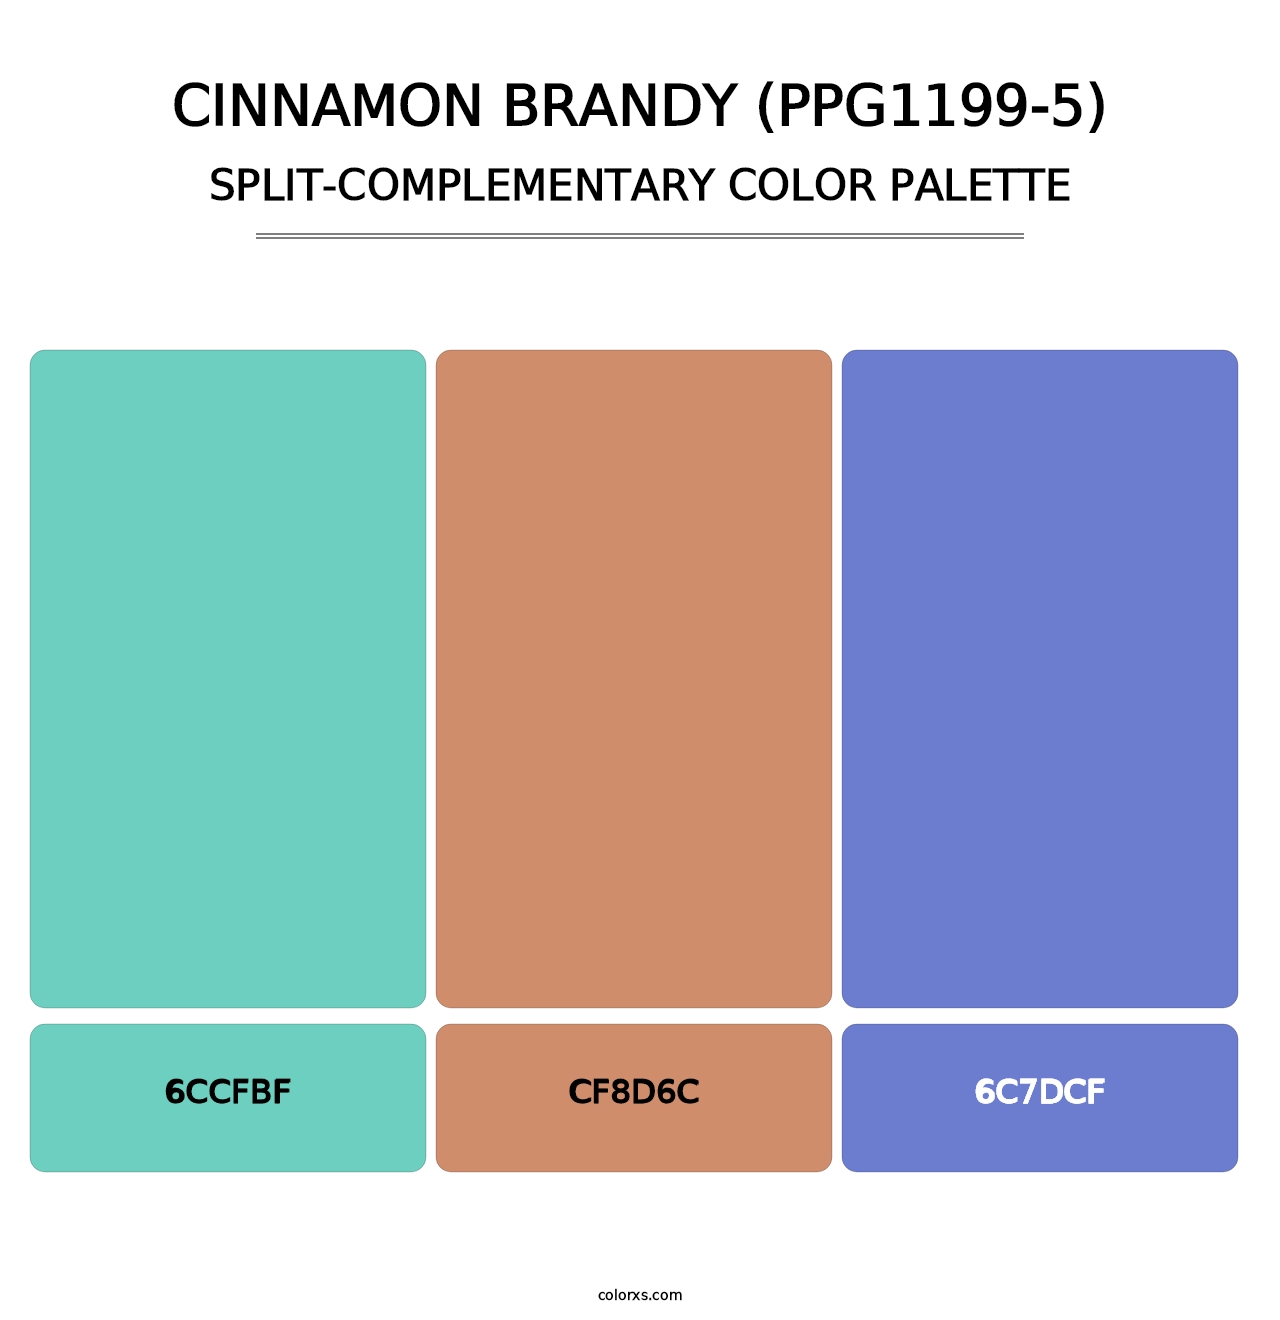 Cinnamon Brandy (PPG1199-5) - Split-Complementary Color Palette